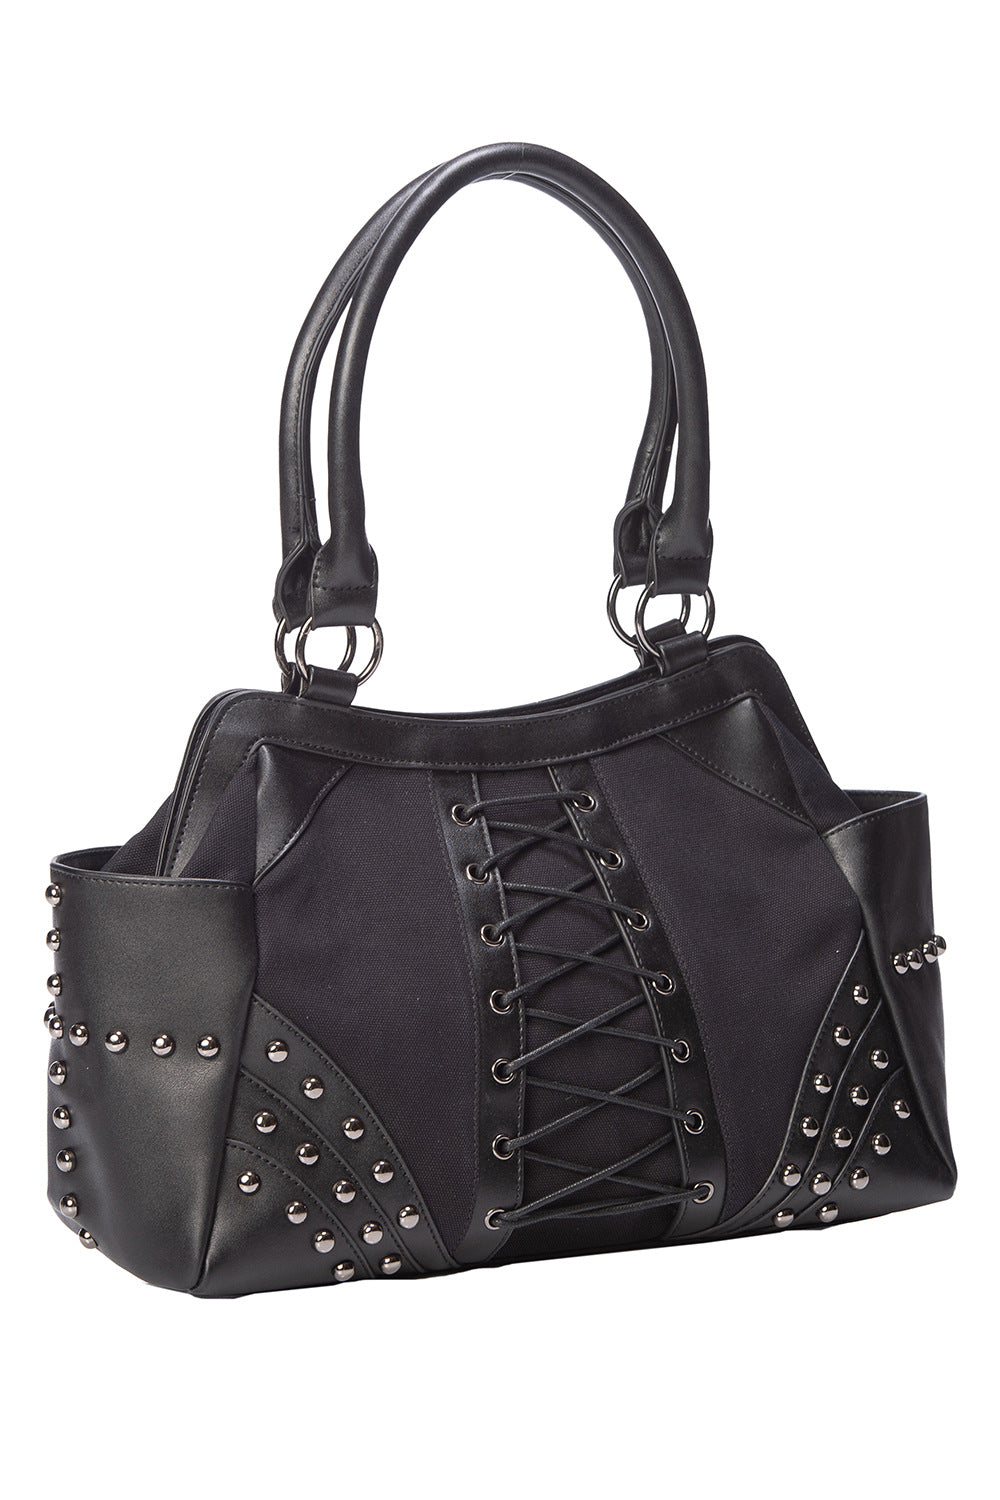 black corset detail handbag with studs